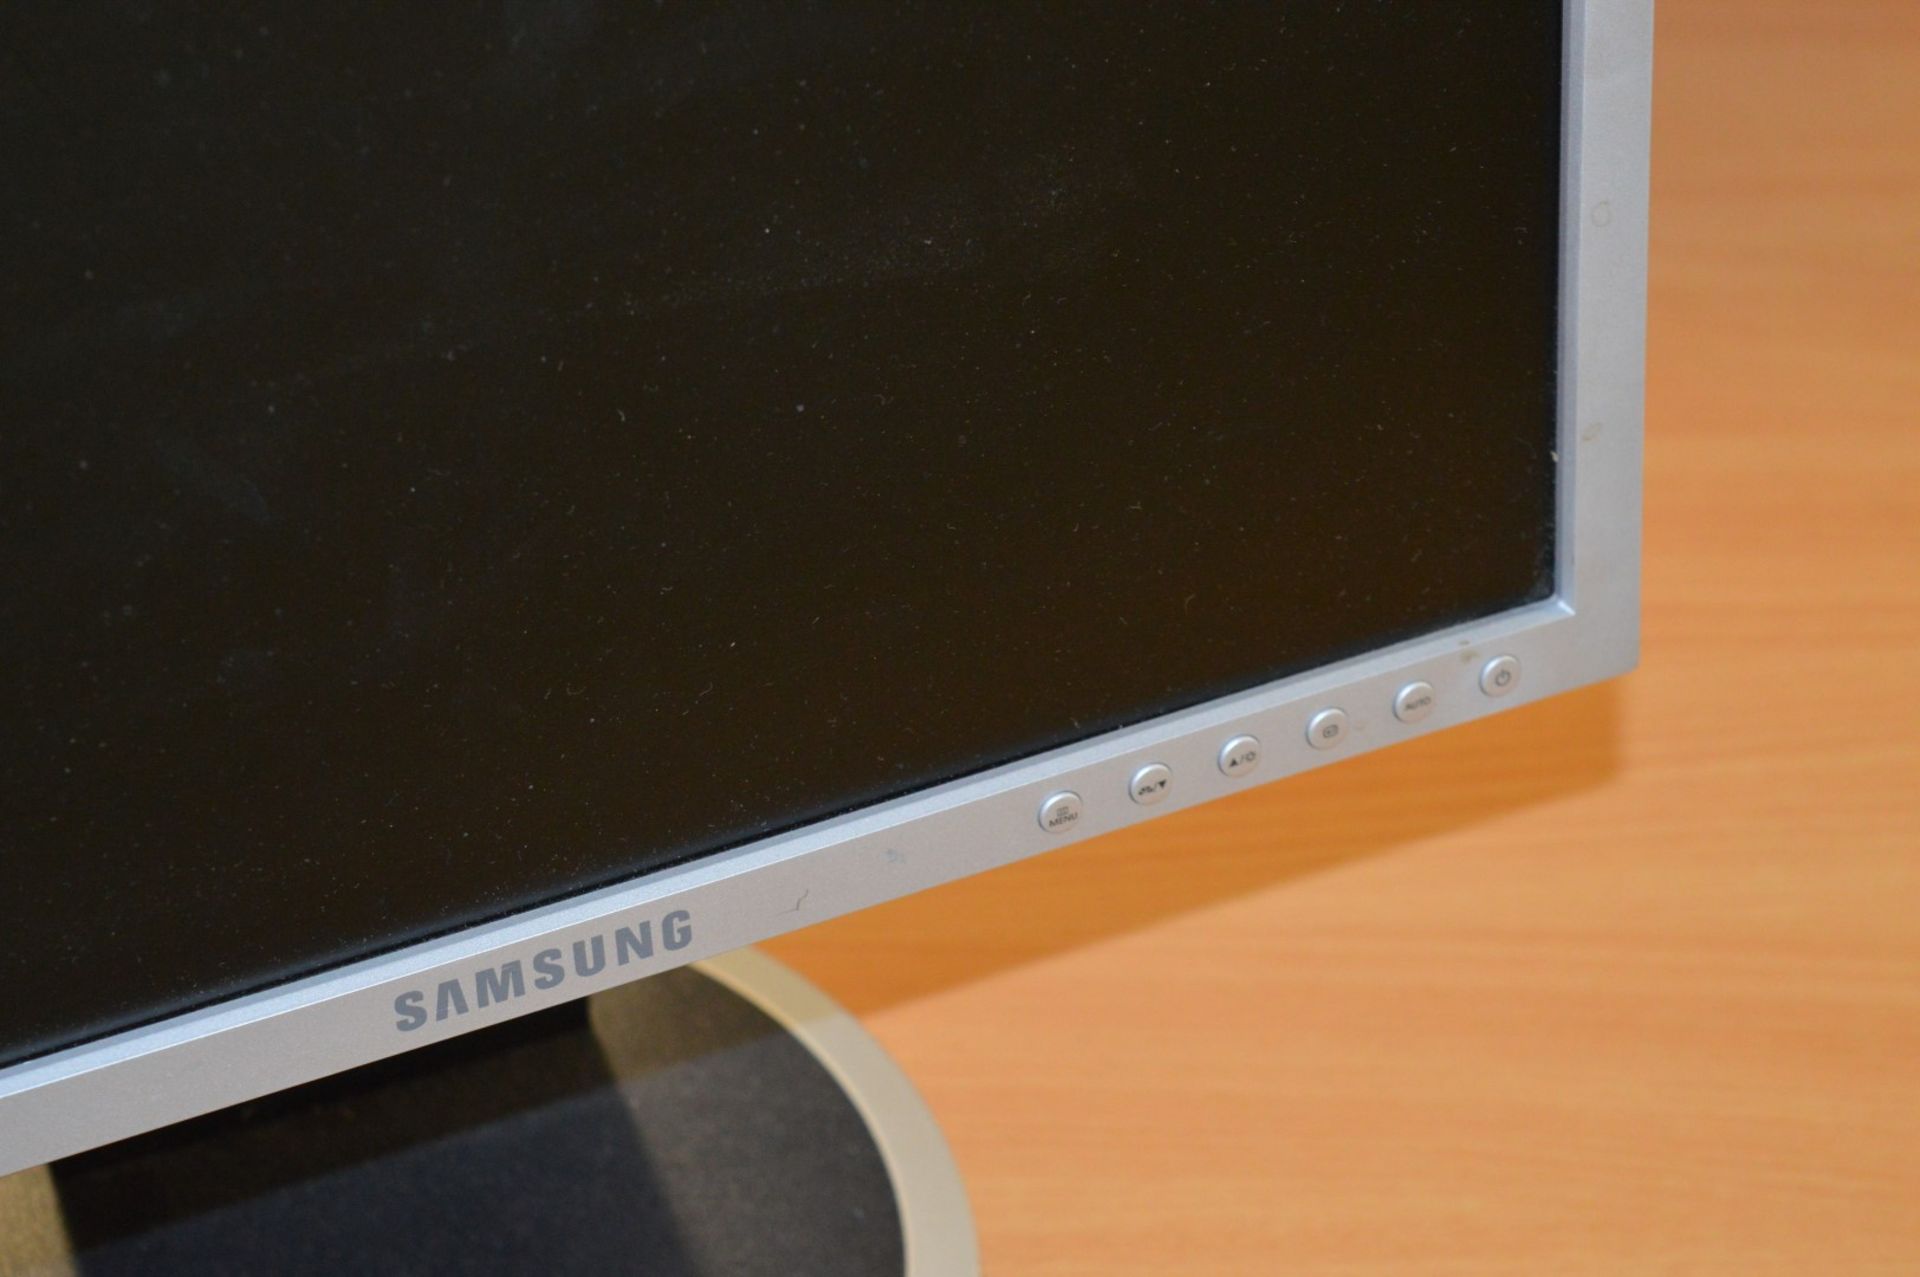 1 x Samsung Syncmaster 740B Flatscreen LCD Monitor - 17 Inch Screen Size - 1280 x 1024 Native - Image 3 of 6